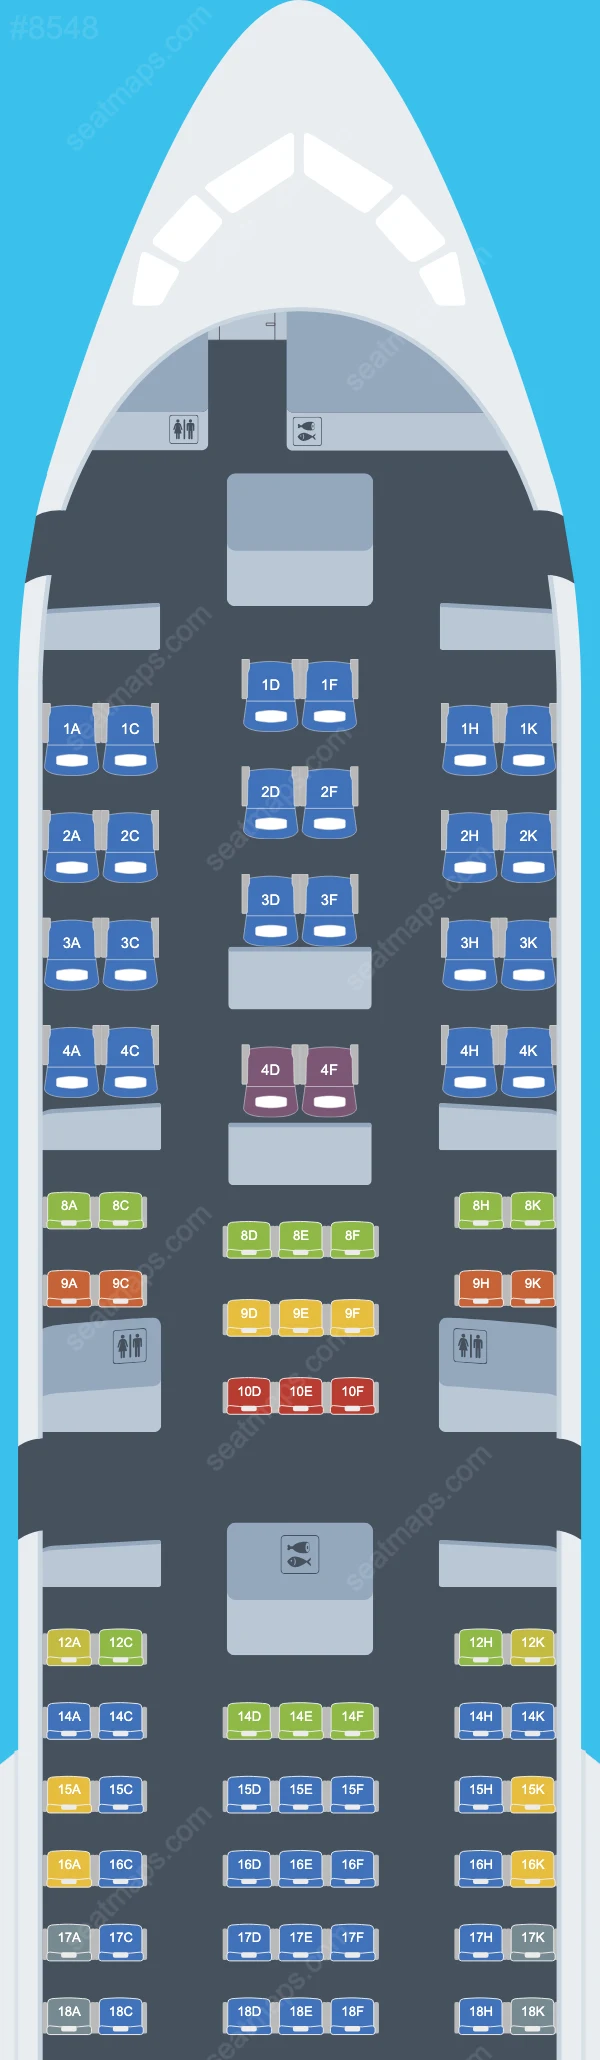 Omni Air International Boeing 767 Seat Maps 767-300 ER V.2